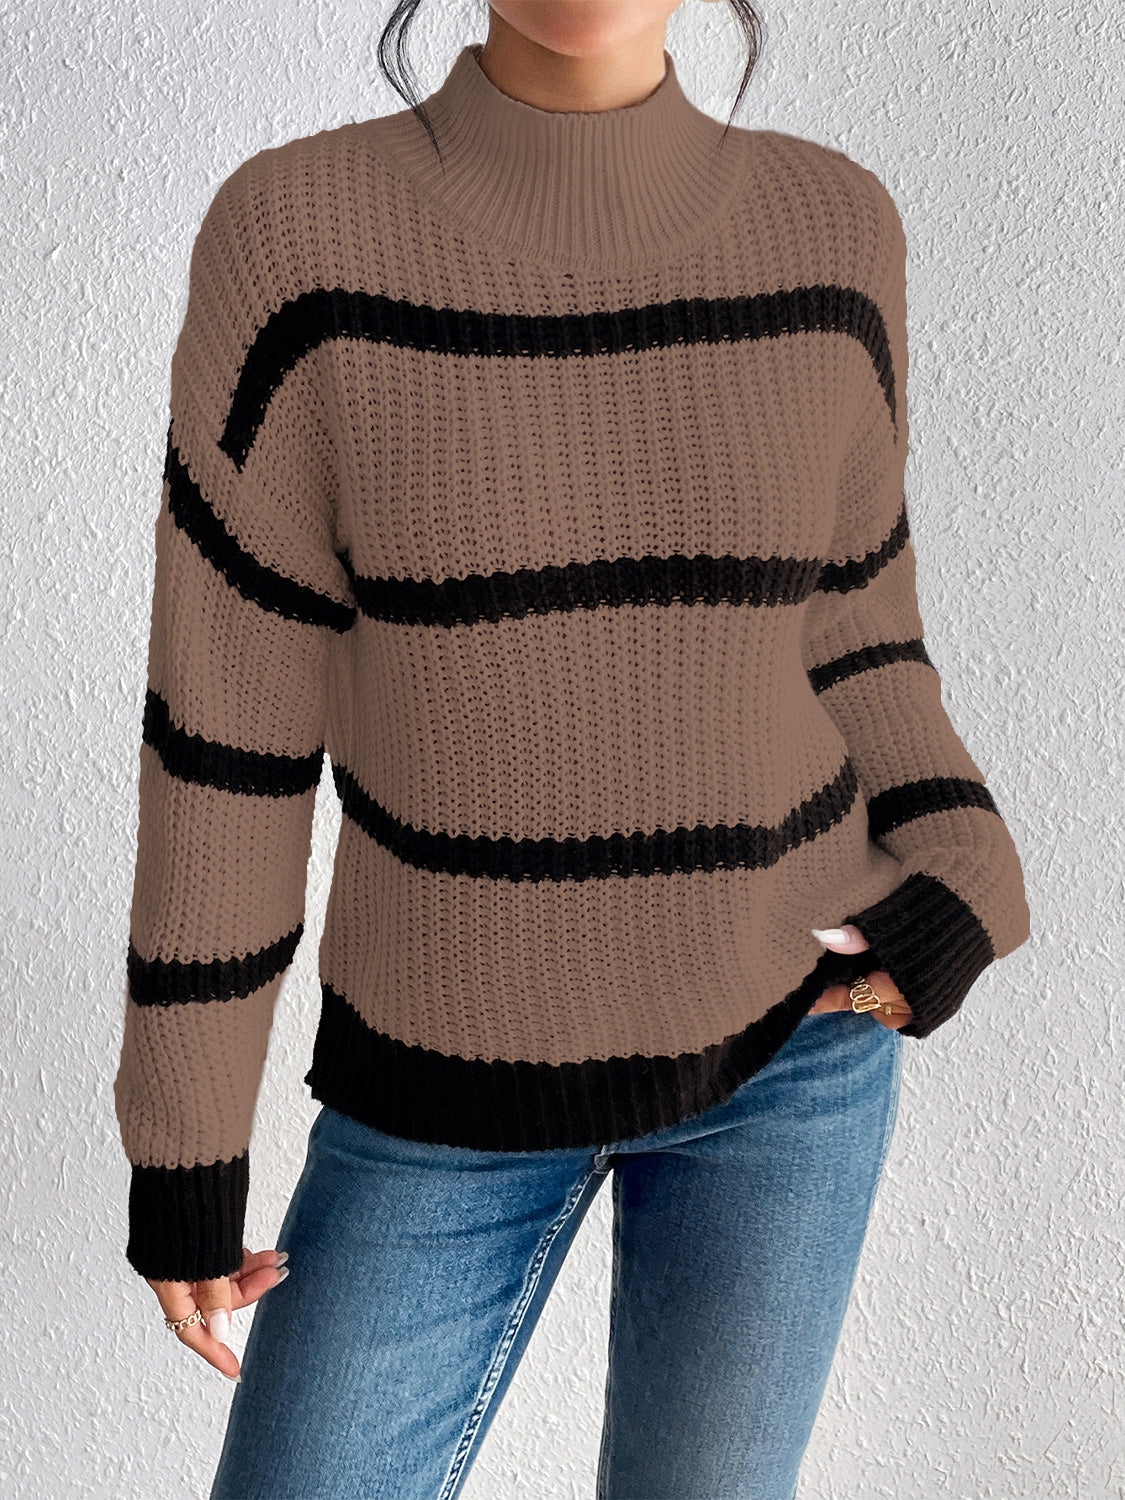 Striped Mock Neck Sweater